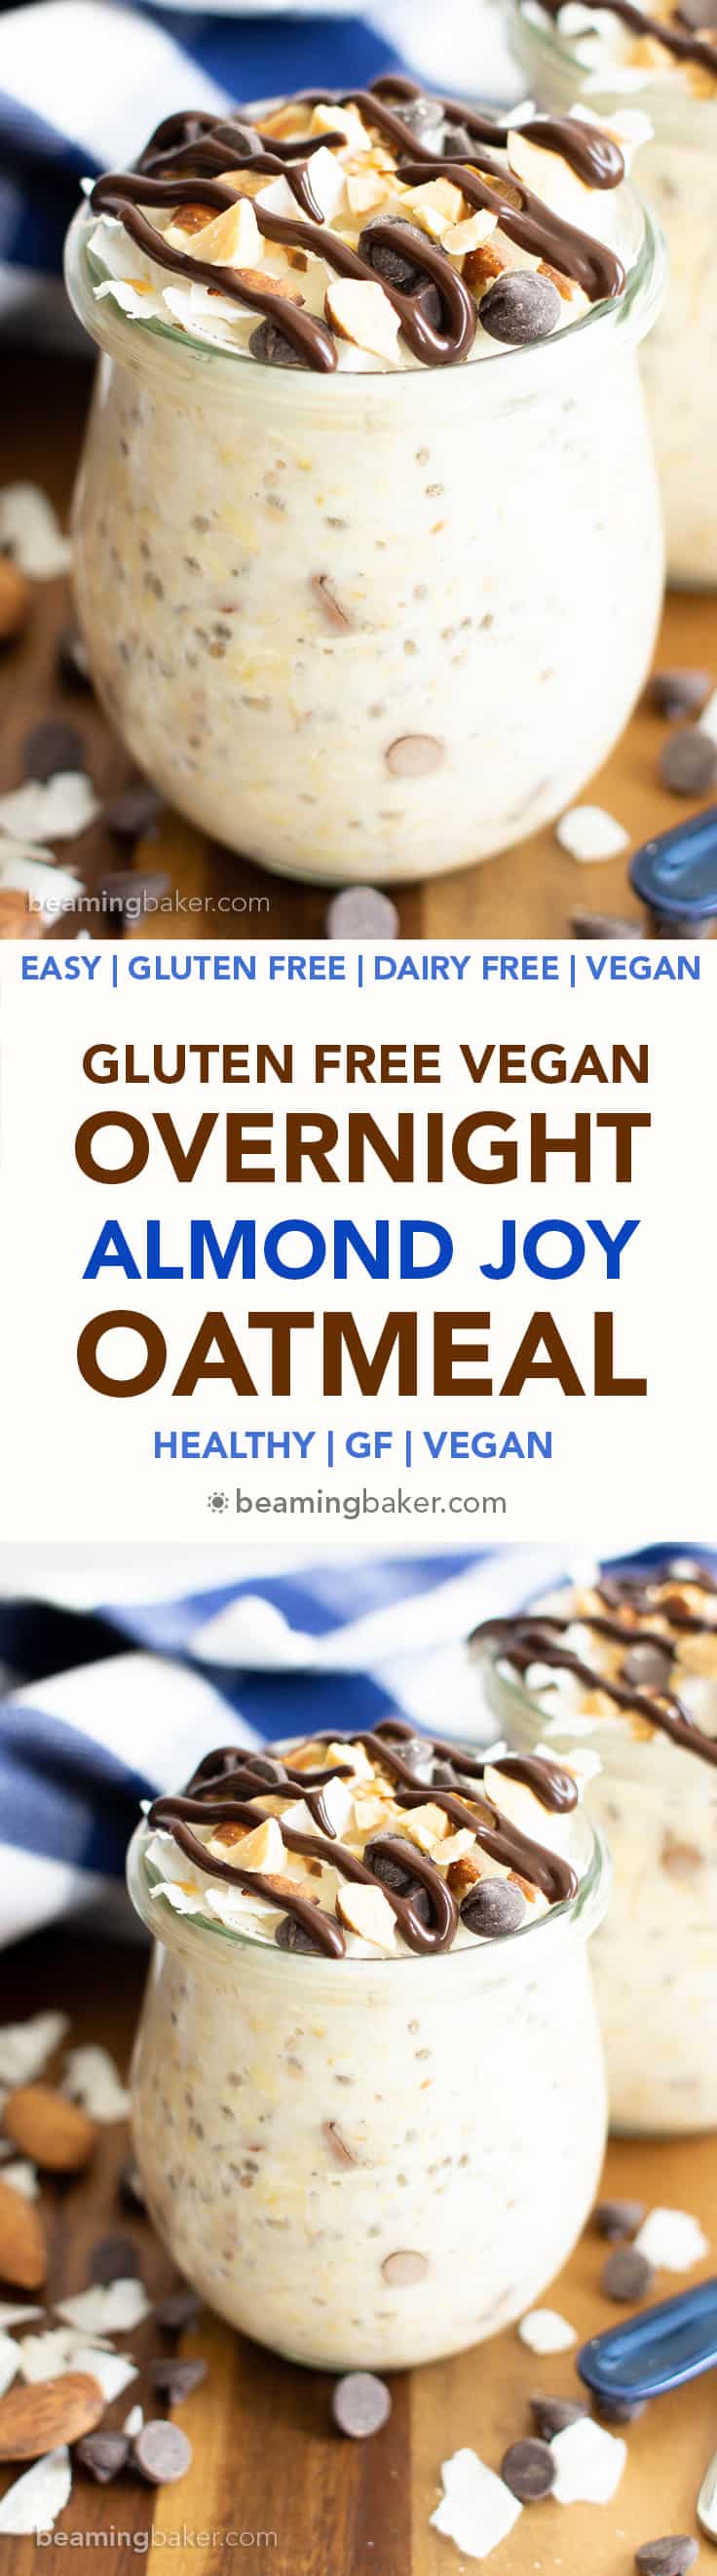 Almond Joy Overnight Oats Recipe (Vegan, GF): super EASY vegan overnight oats that are dessert for breakfast! Tasty vegan overnight oatmeal bursting with almonds, chocolate & coconut goodness. Healthy, Gluten Free, Dairy-Free. #OvernightOats #OvernightOatmeal #Vegan #Breakfast #Healthy | Recipe at BeamingBaker.com